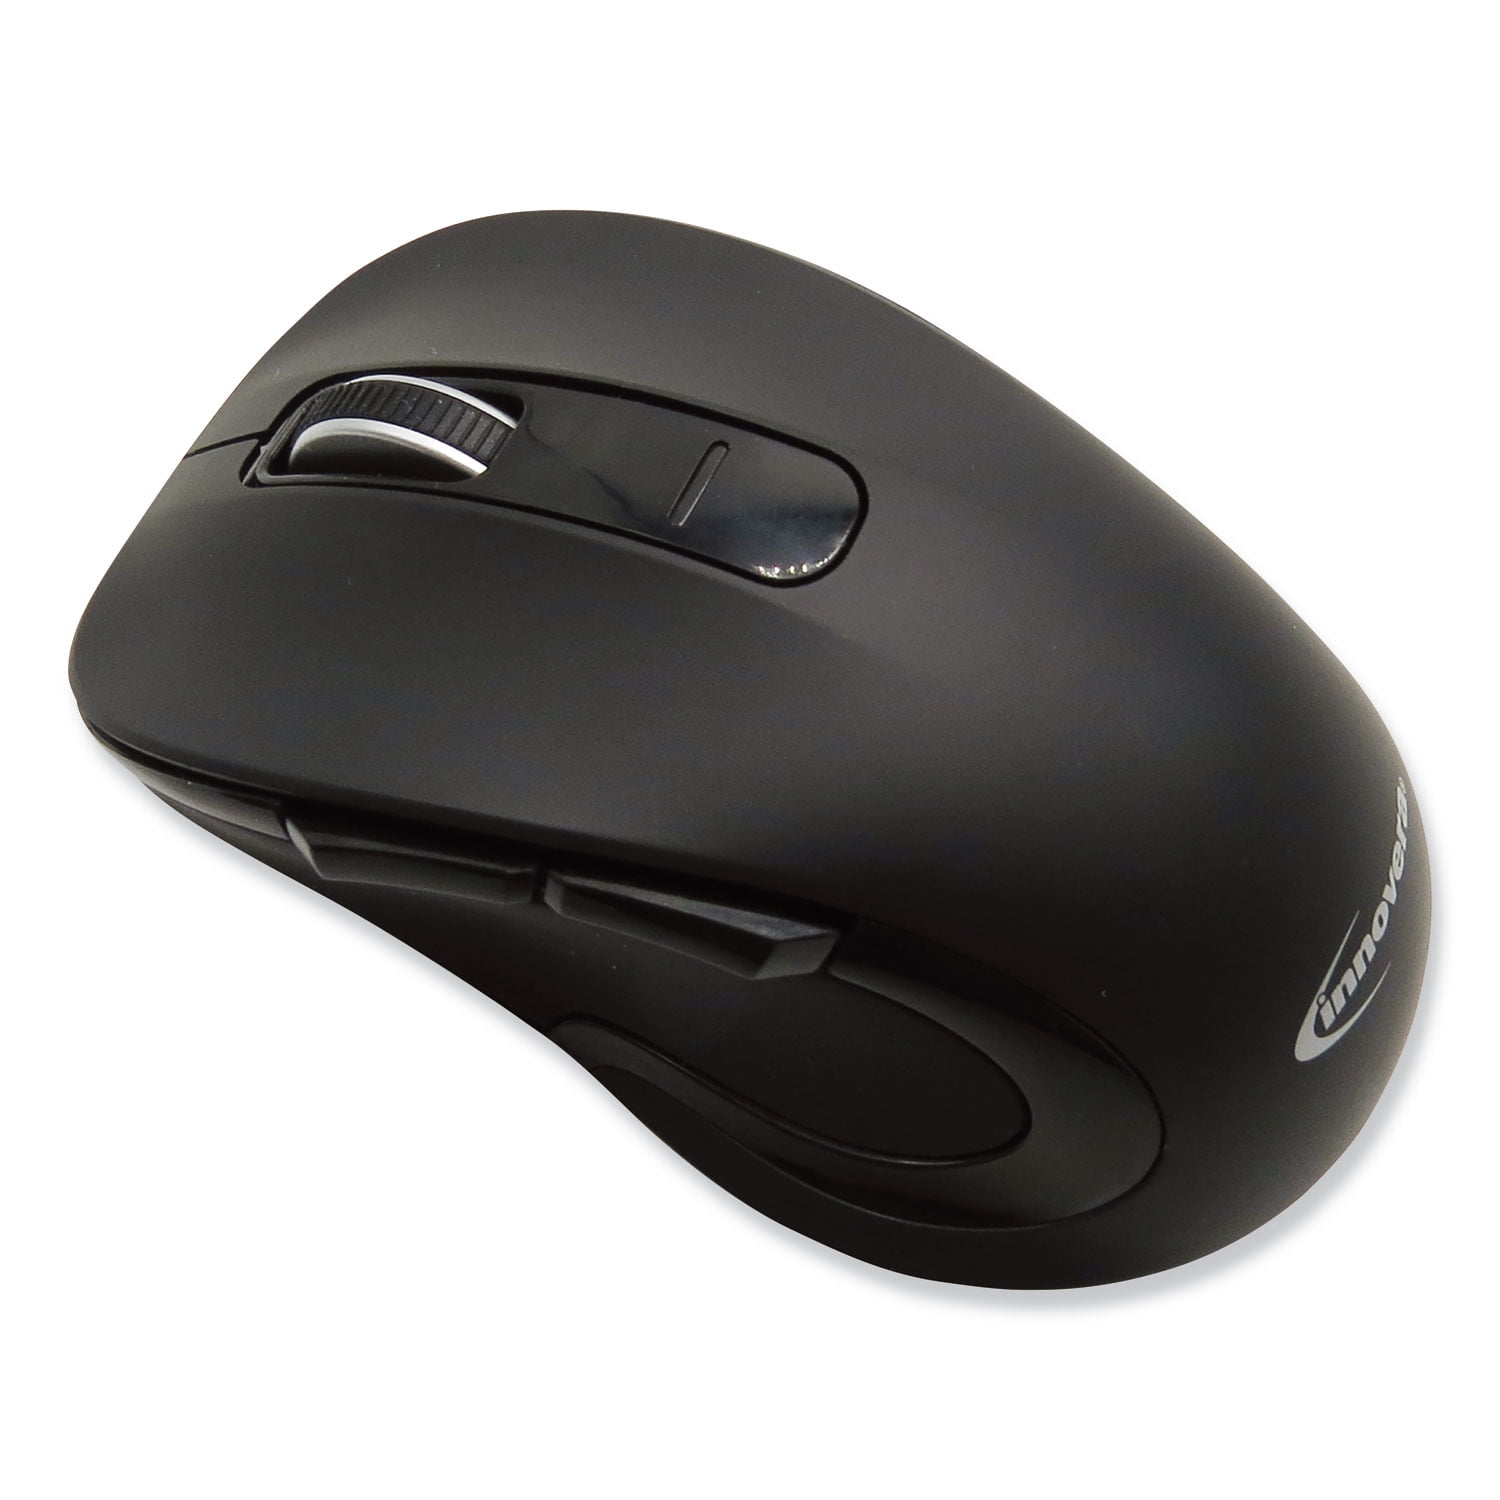 Игровая мышь беспроводная io. Мышка Wireless Optical Mouse. 2.4GHZ Wireless Optical Mouse. Мышка Intro 2.4GHZ Wireless. Optical Mouse 3600 вз.